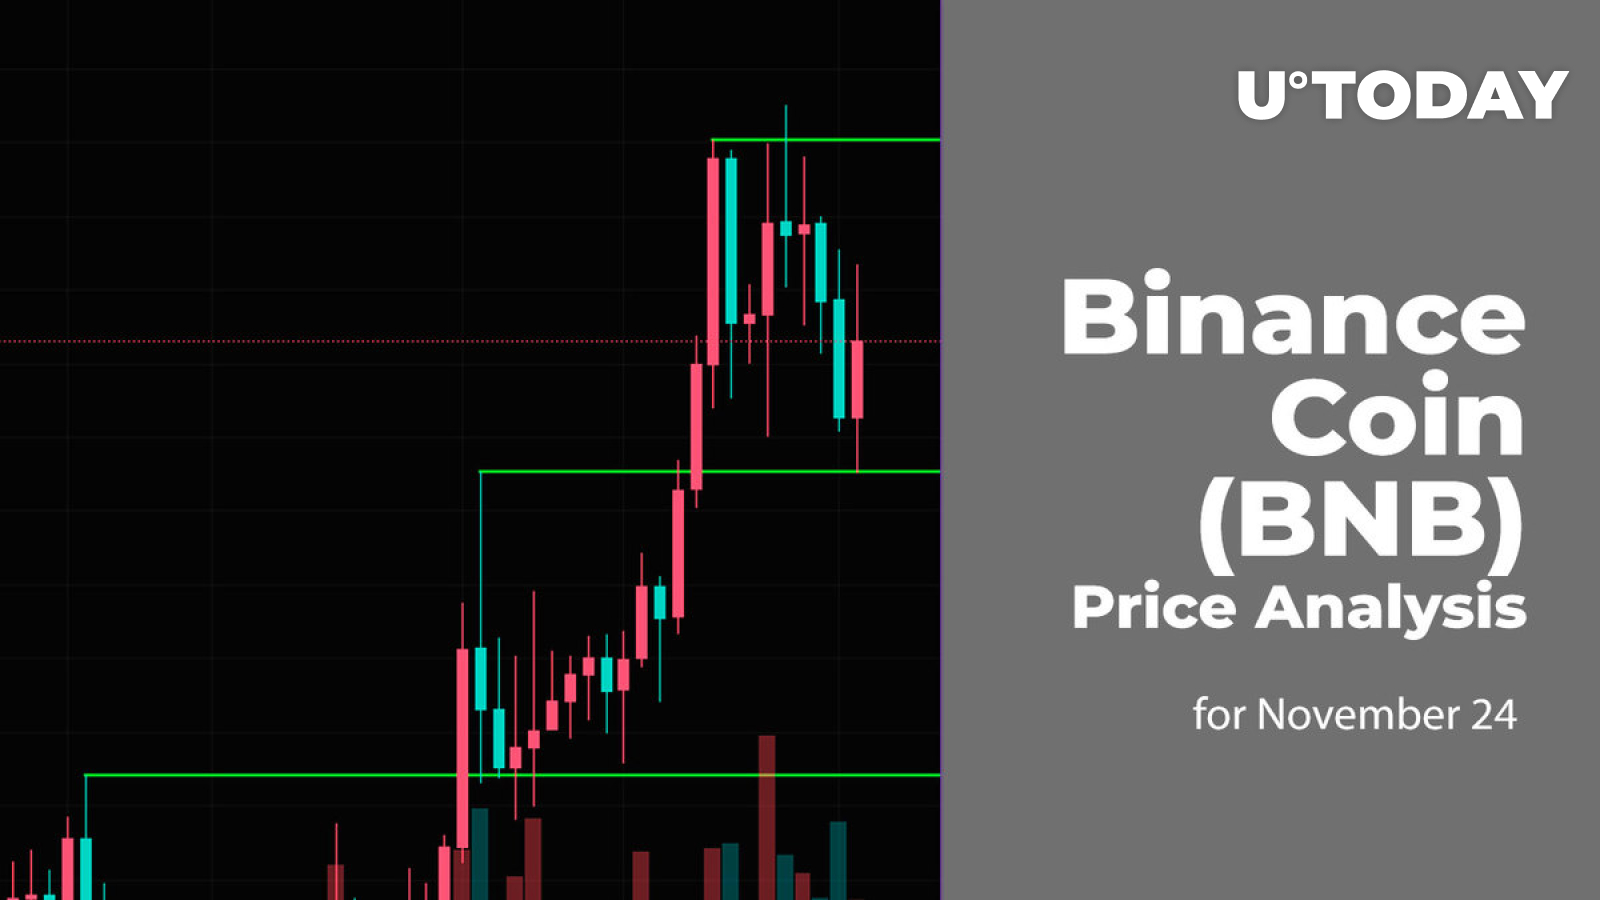 Binance Coin (BNB) Price Analysis for November 24